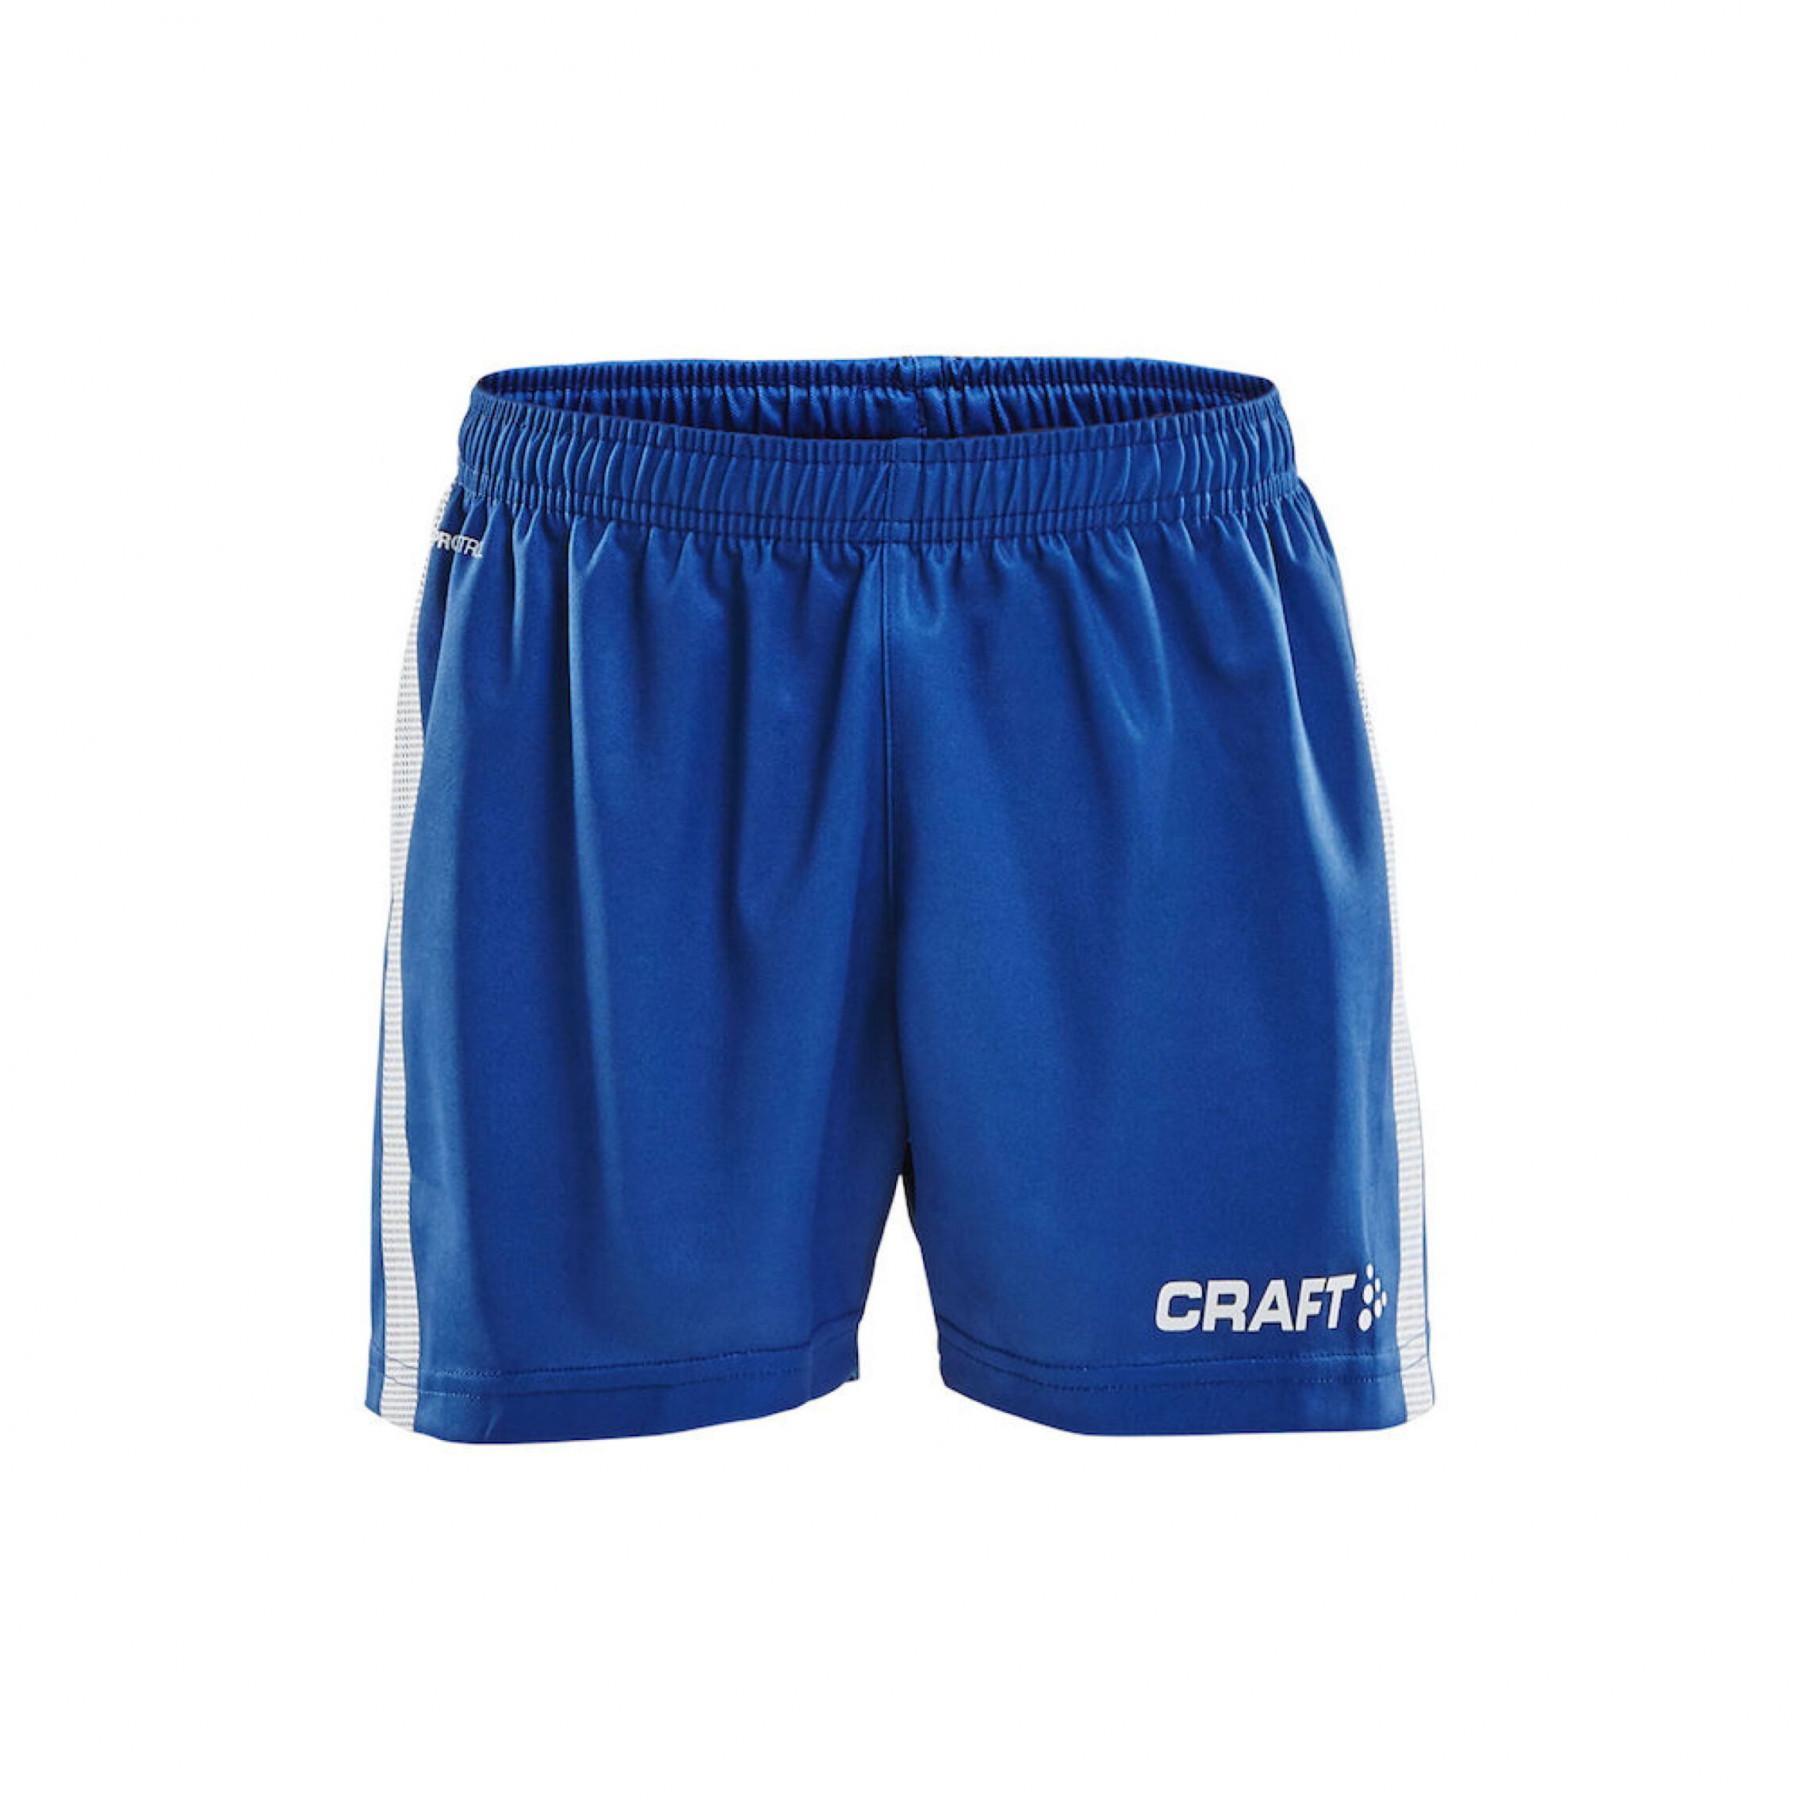 Kinder shorts Craft pro control